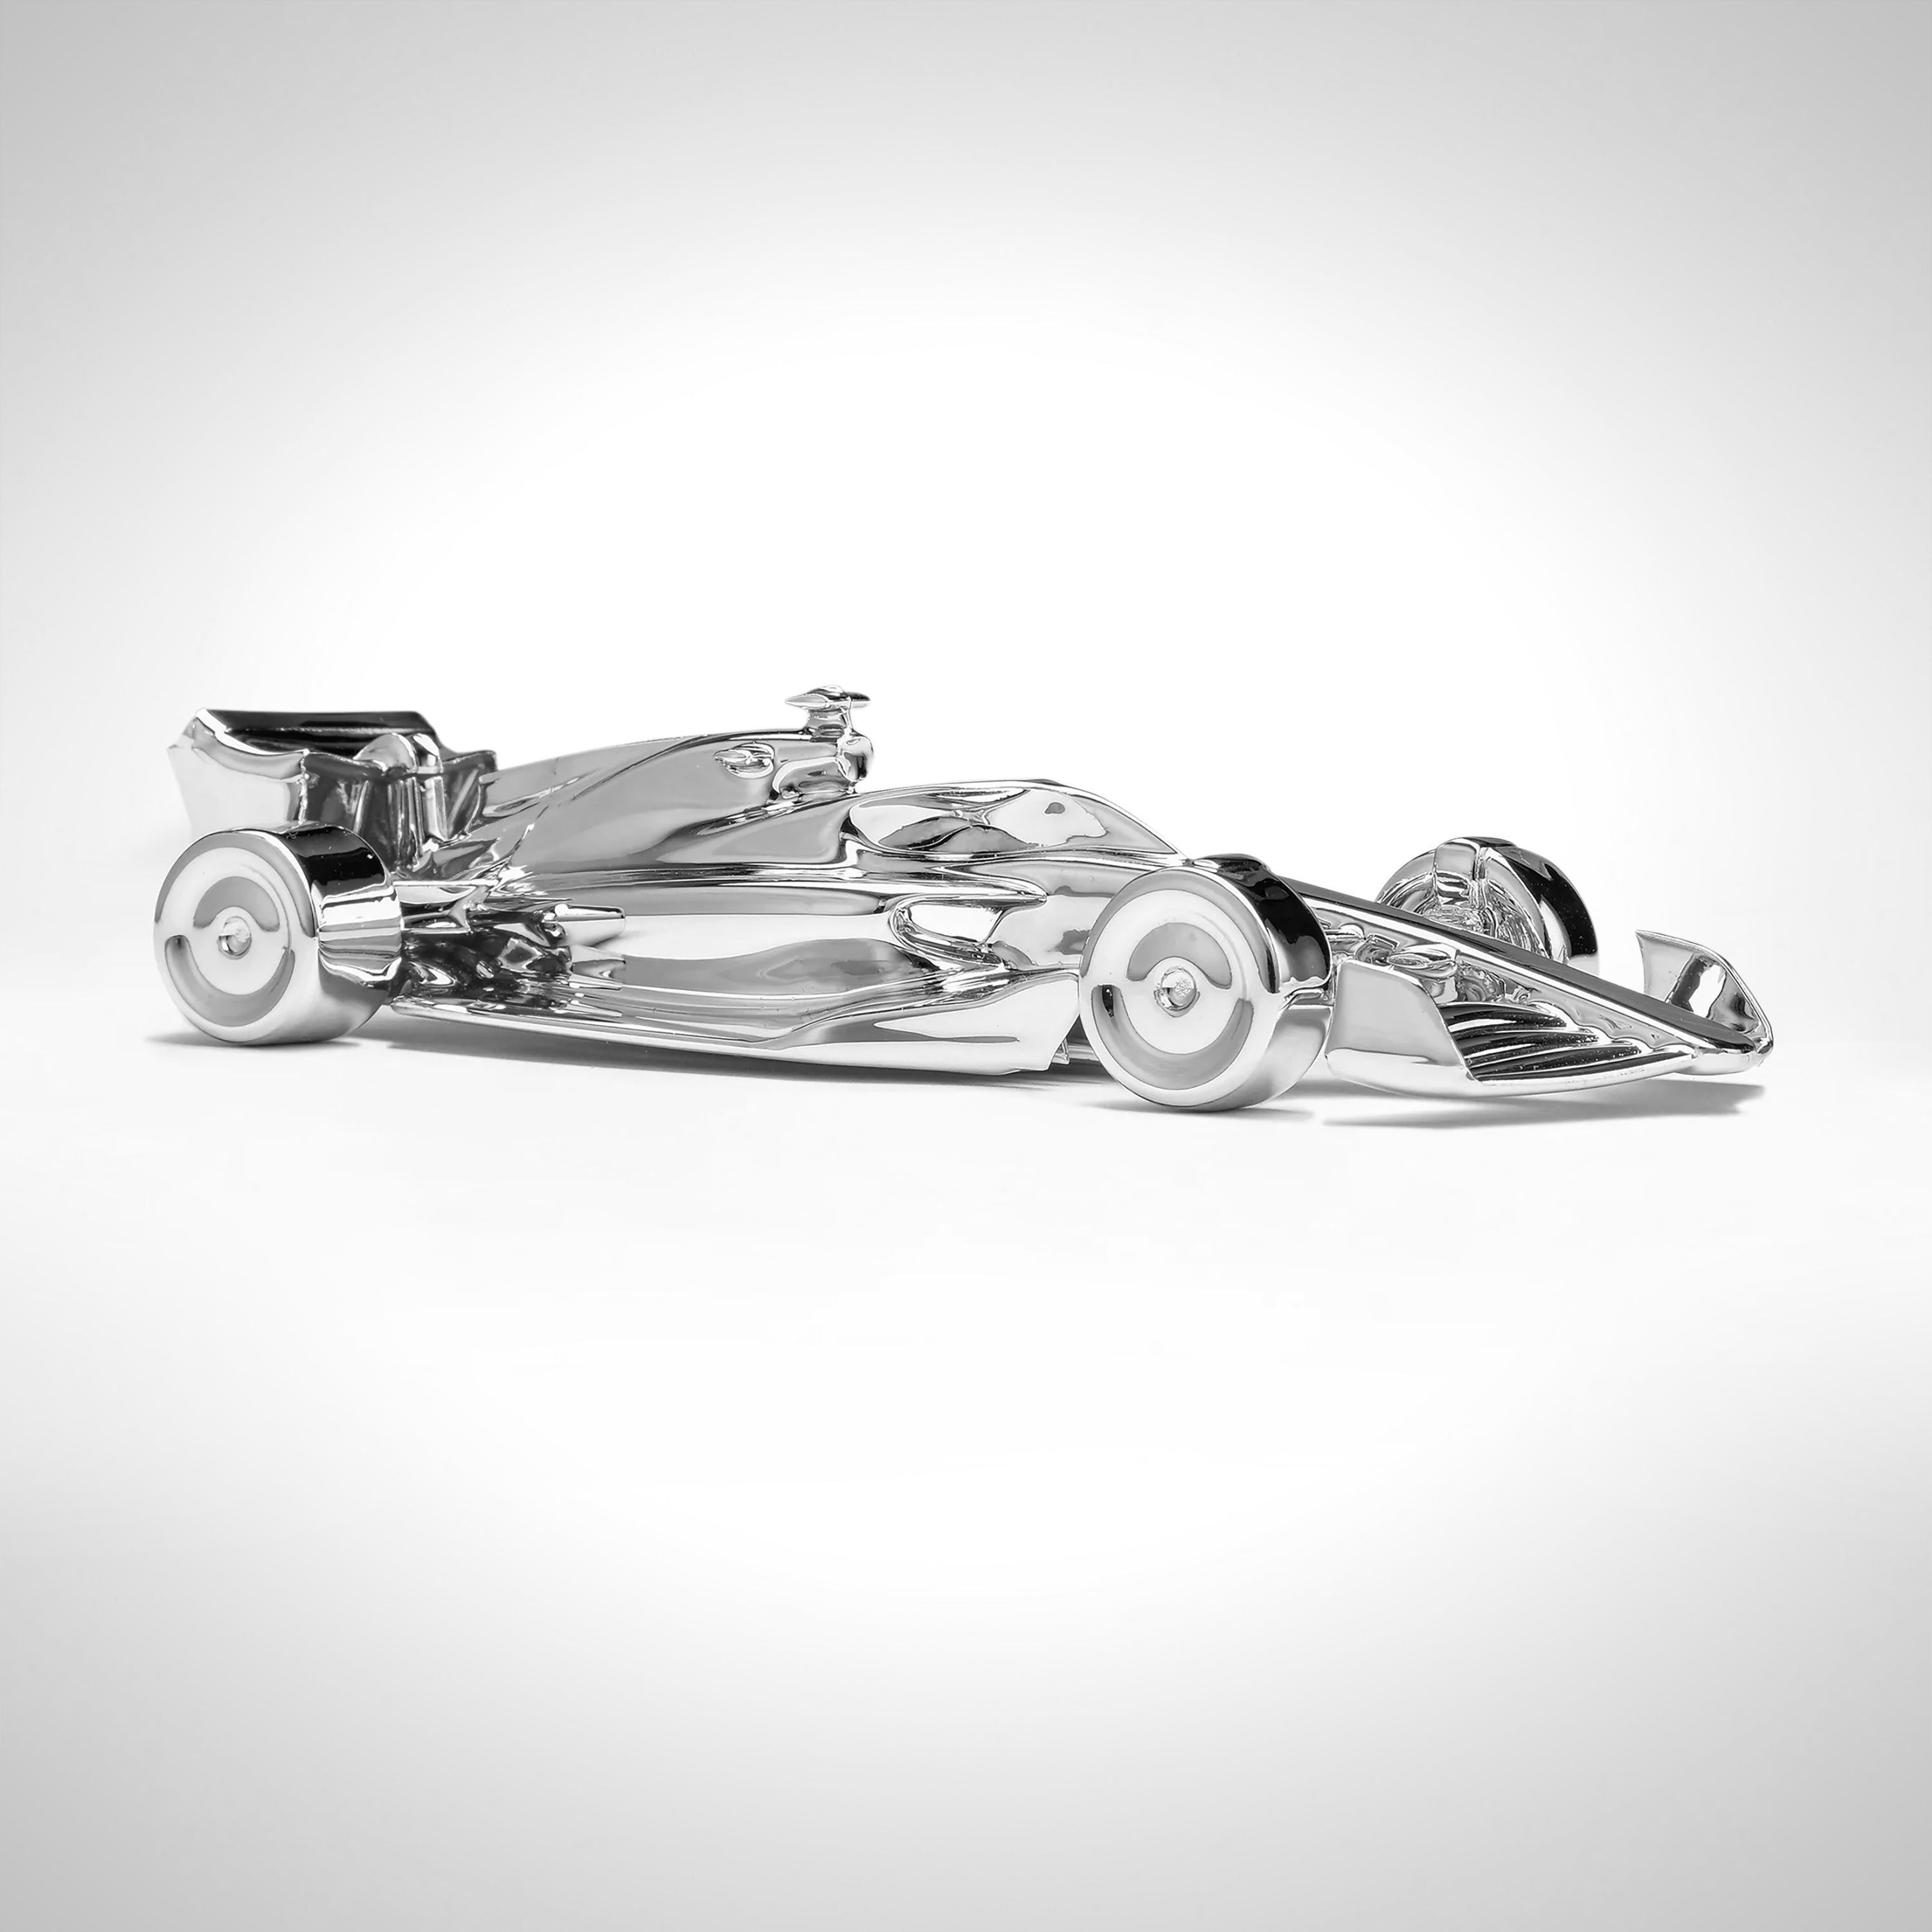 Indycar Concept | tunersread.com